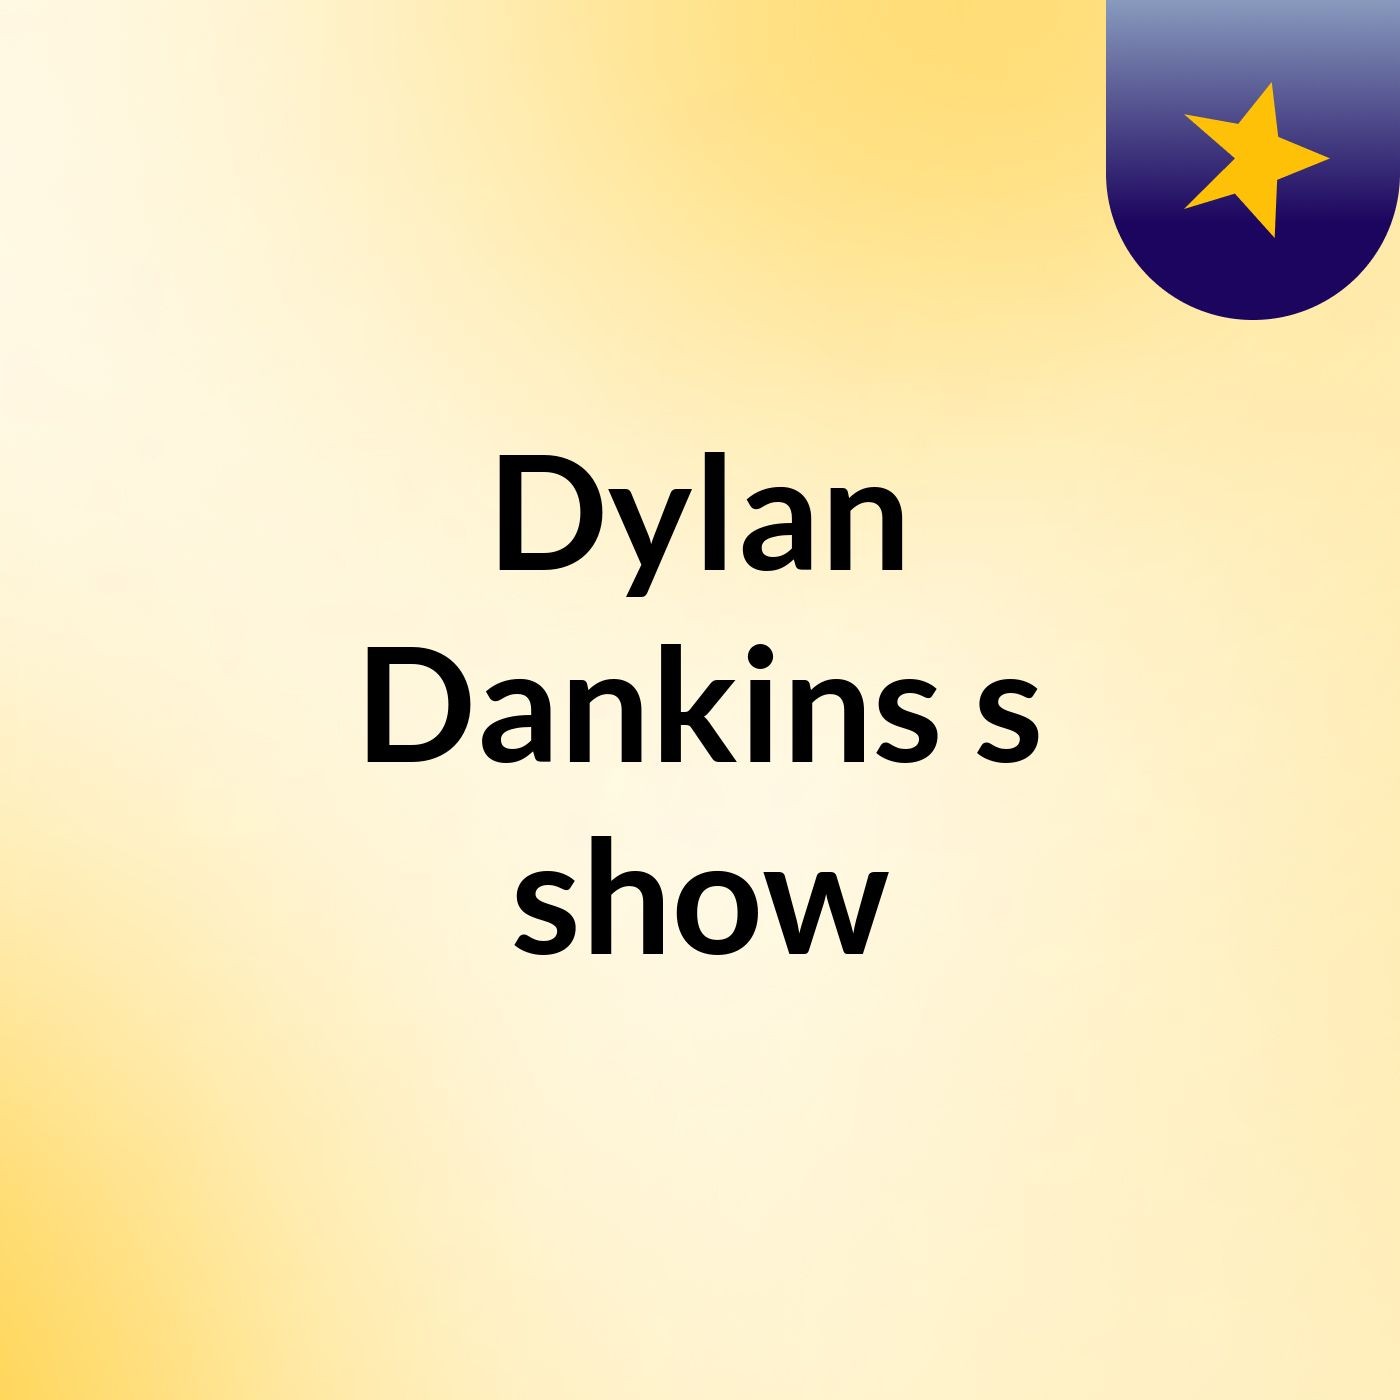 Dylan Dankins's show